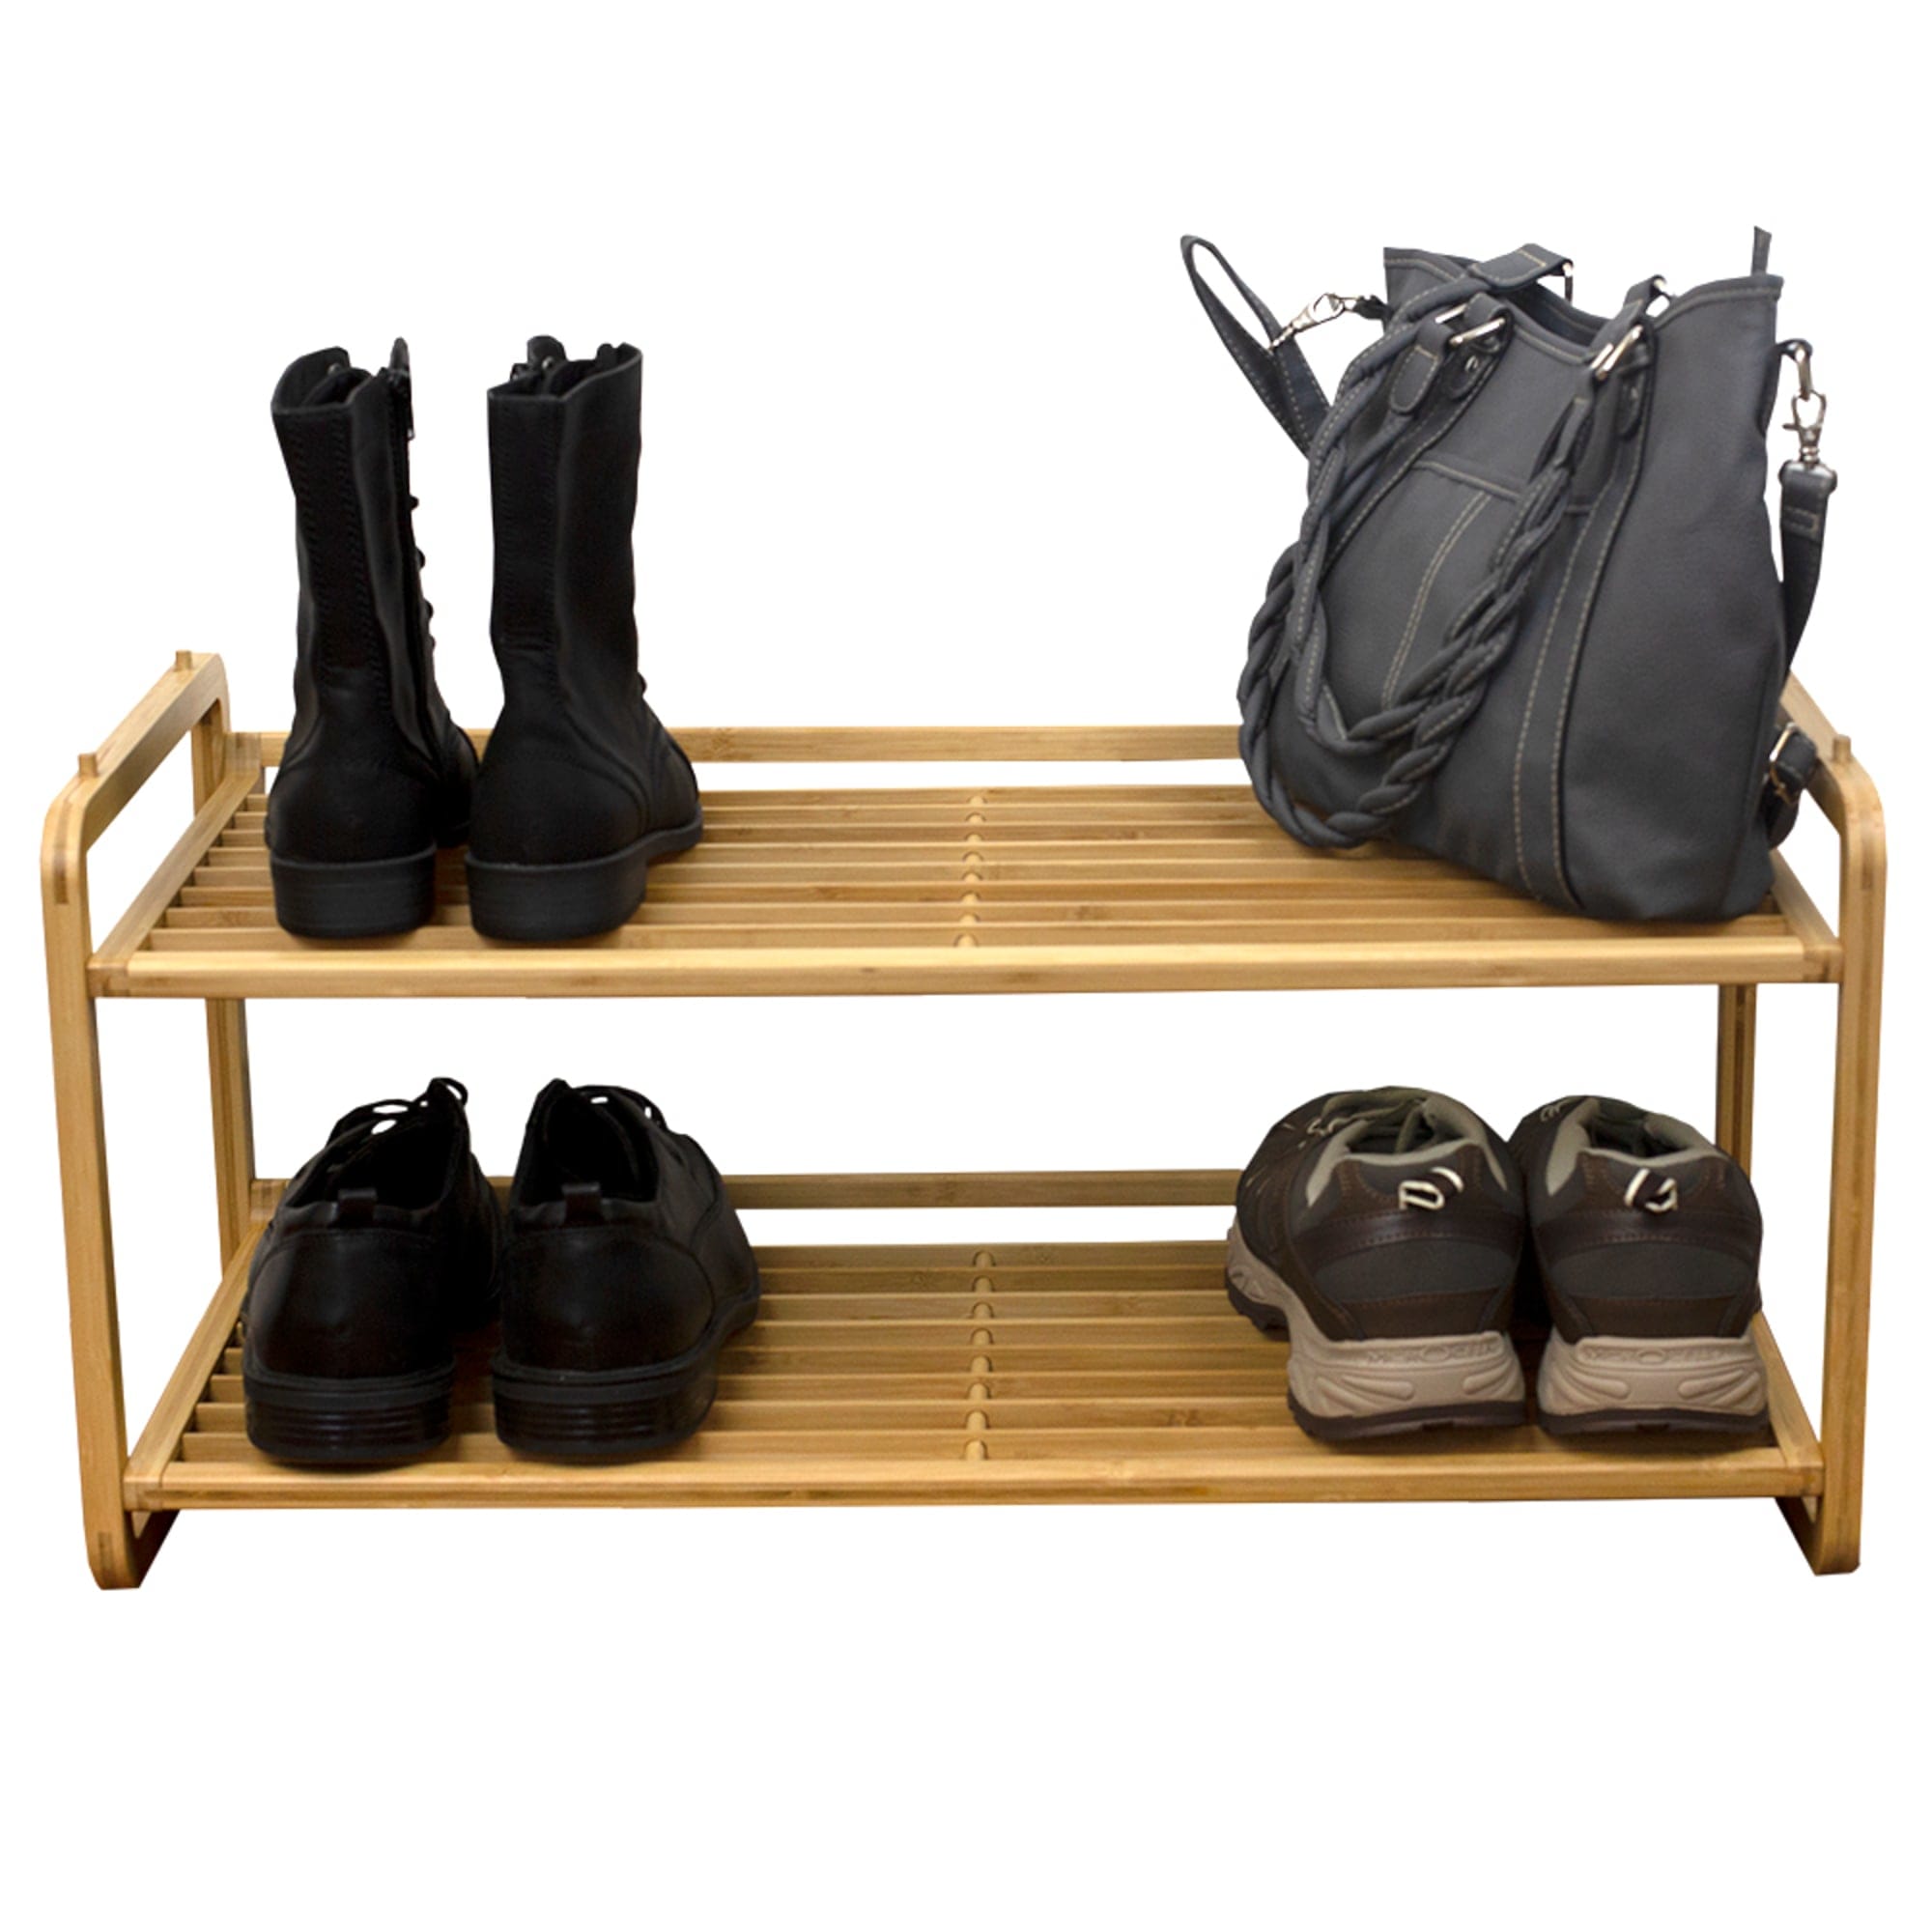 Home Basics 2 Tier Slatted Shelf Bamboo Shoe Rack, Natural $30.00 EACH, CASE PACK OF 1